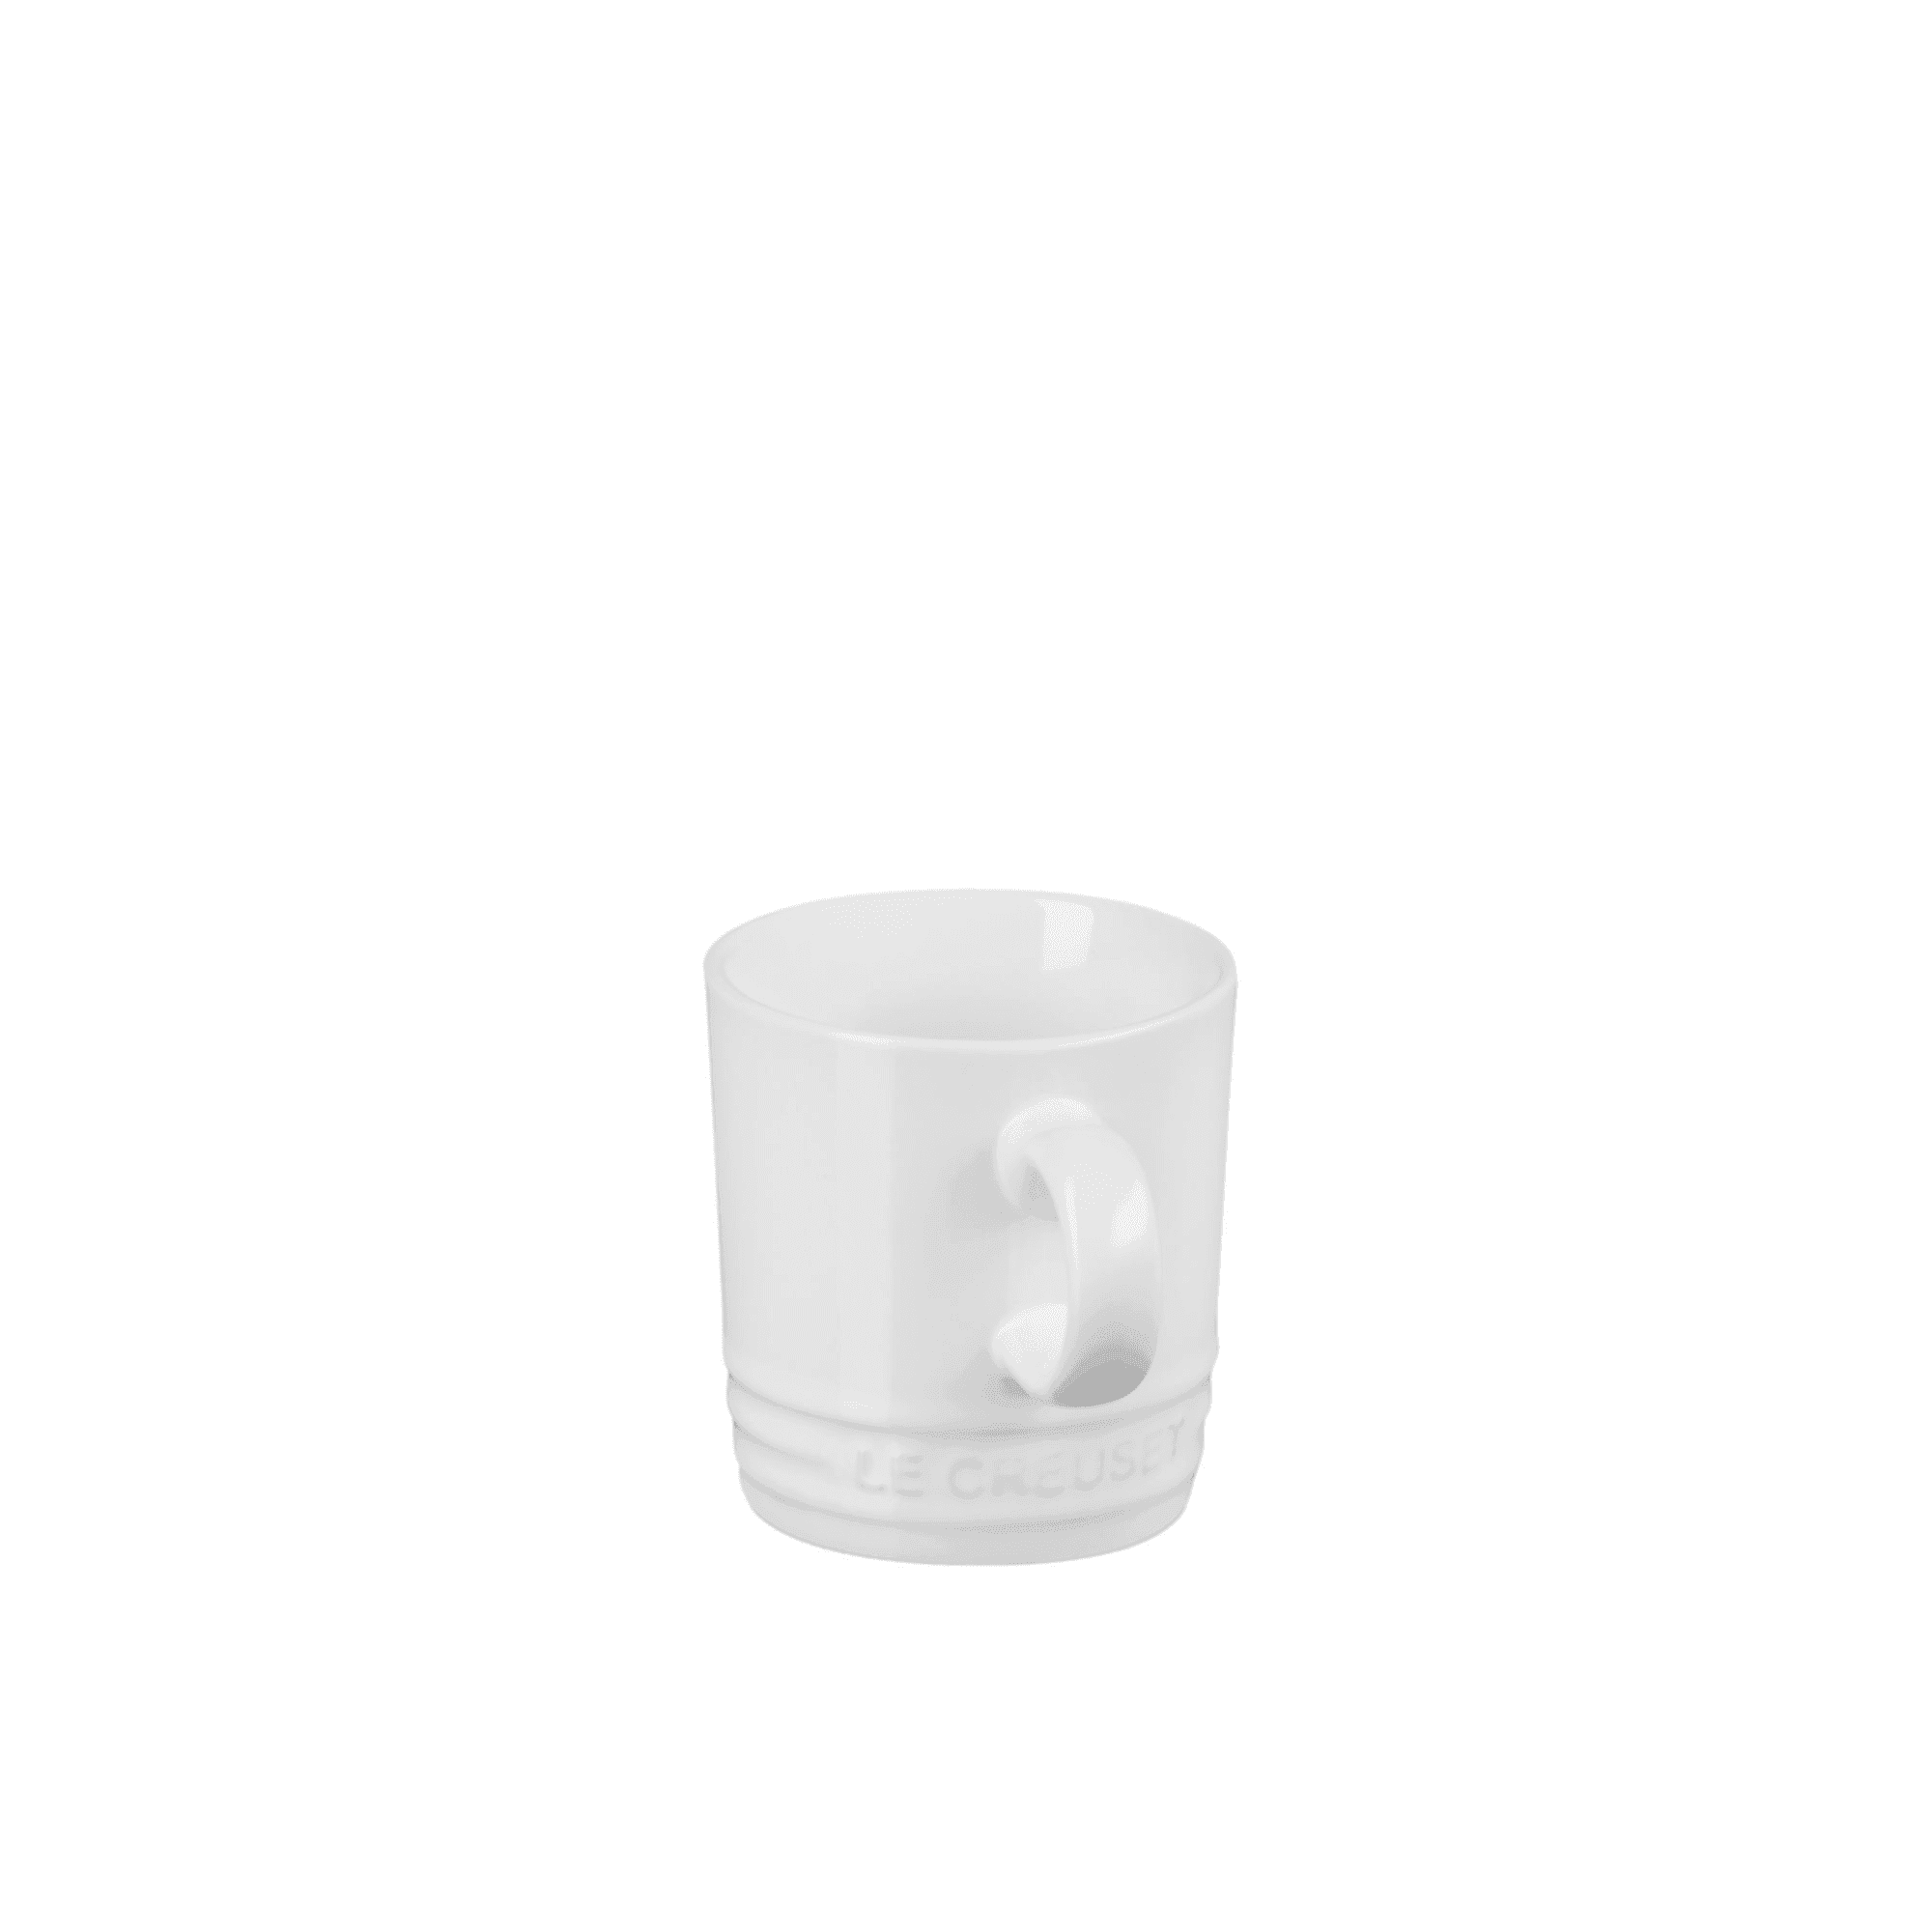 Le Creuset Stoneware Espresso Mug 100ml White Image 5